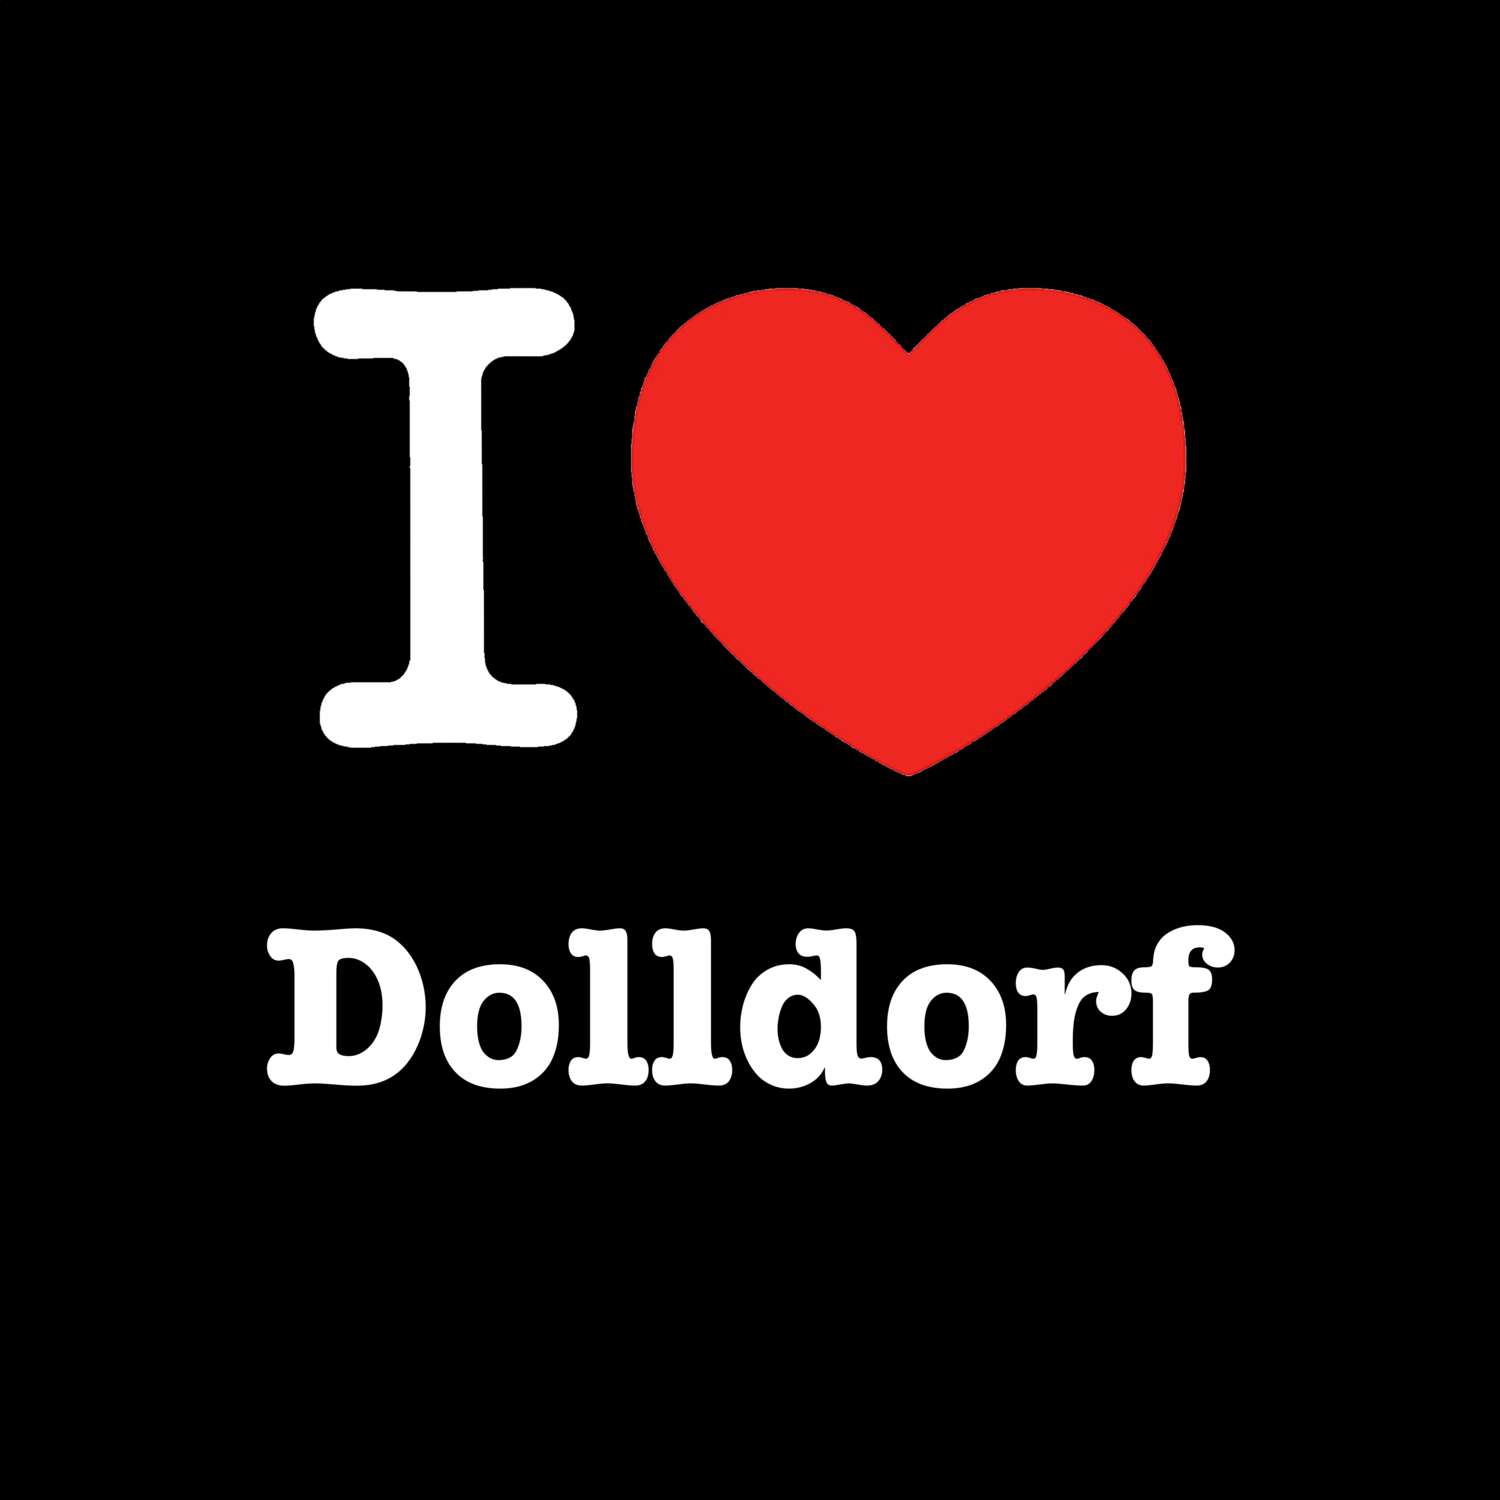 Dolldorf T-Shirt »I love«